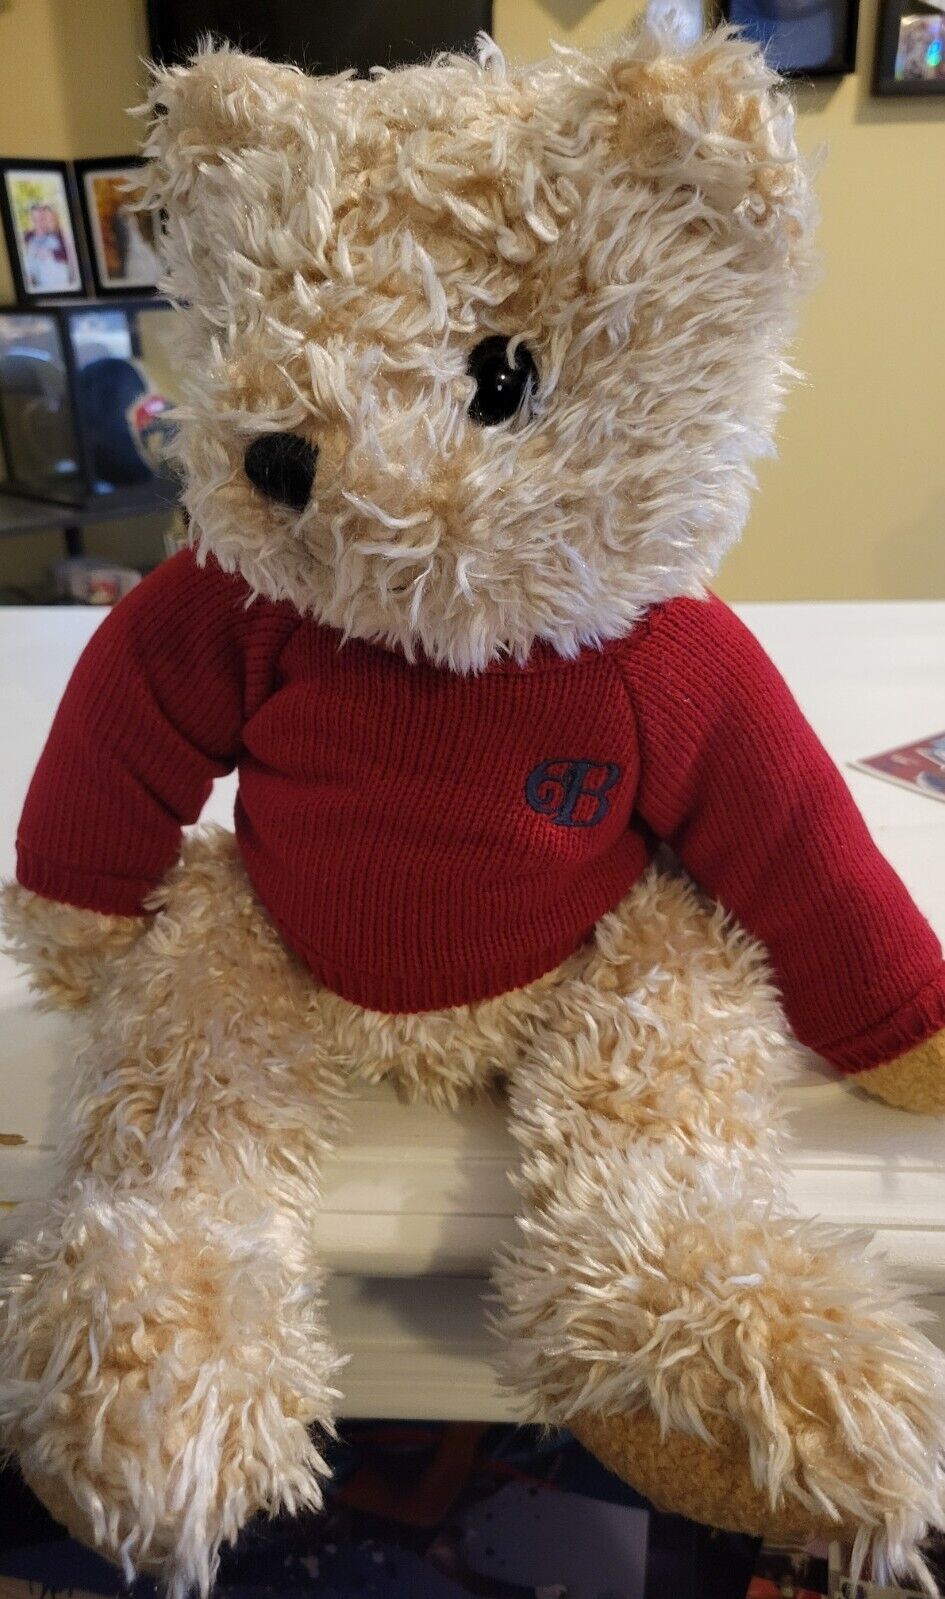 BELKIE 1997 BELK TEDDY BEAR DEPARTMENT STORE HOLIDAY PLUSH RED SWEATER VINTAGE